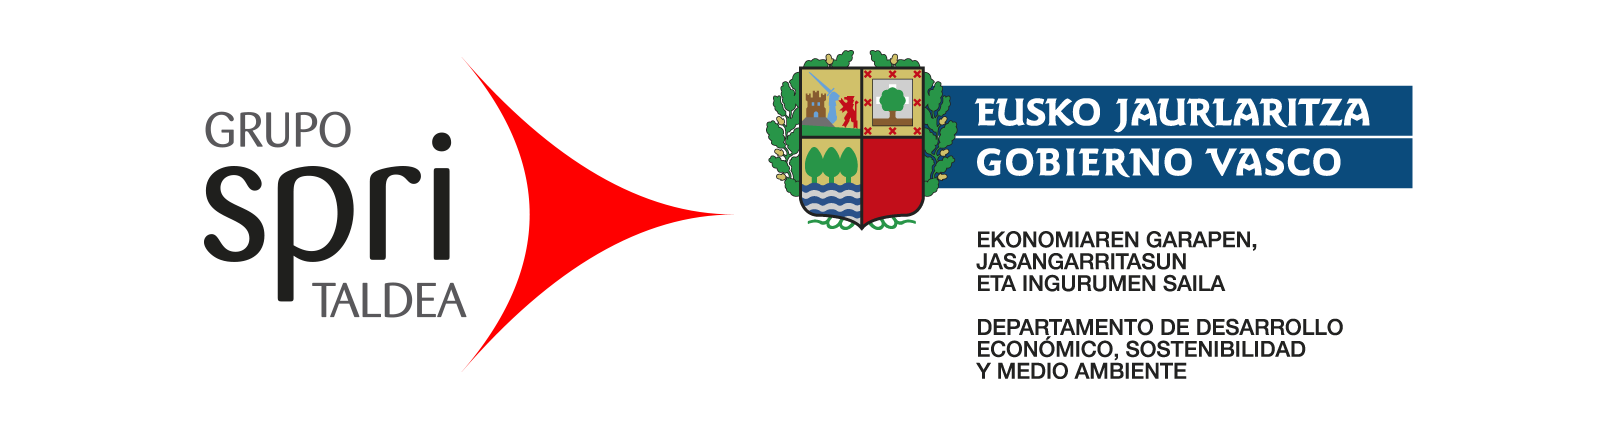 logos grupo spri taldea y eusko jaurlaritza gobierno vasco